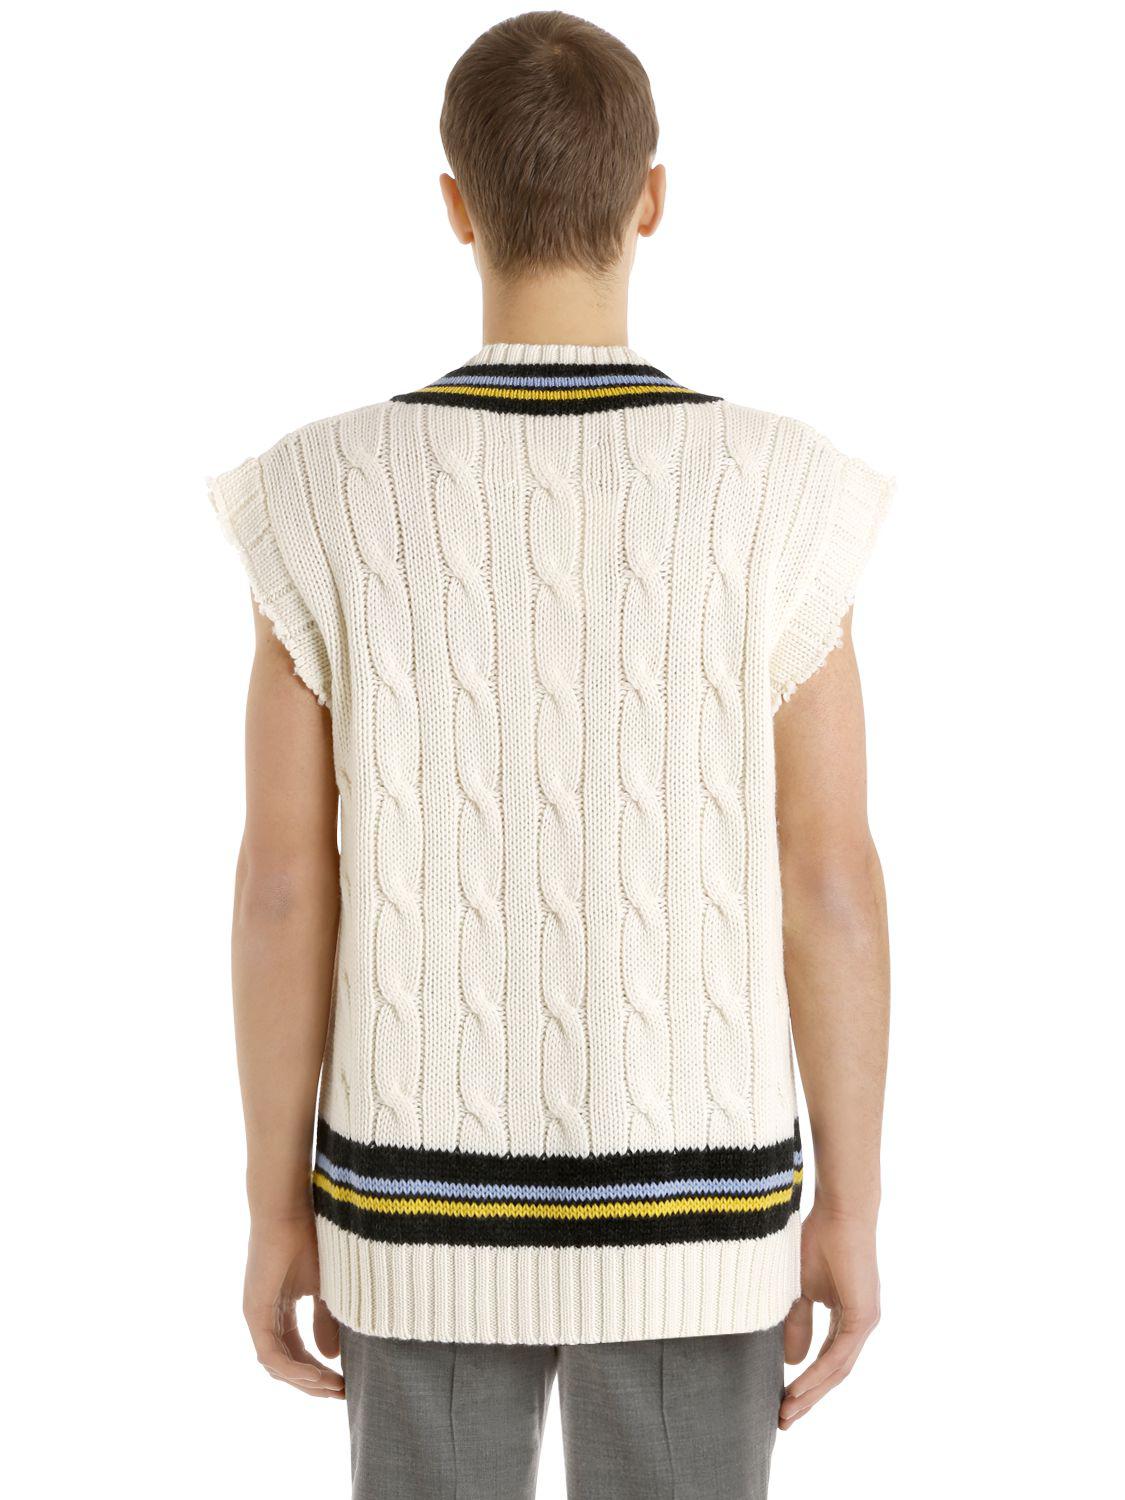 Maison Margiela Oversized Wool Cable Knit Vest in White for Men - Lyst